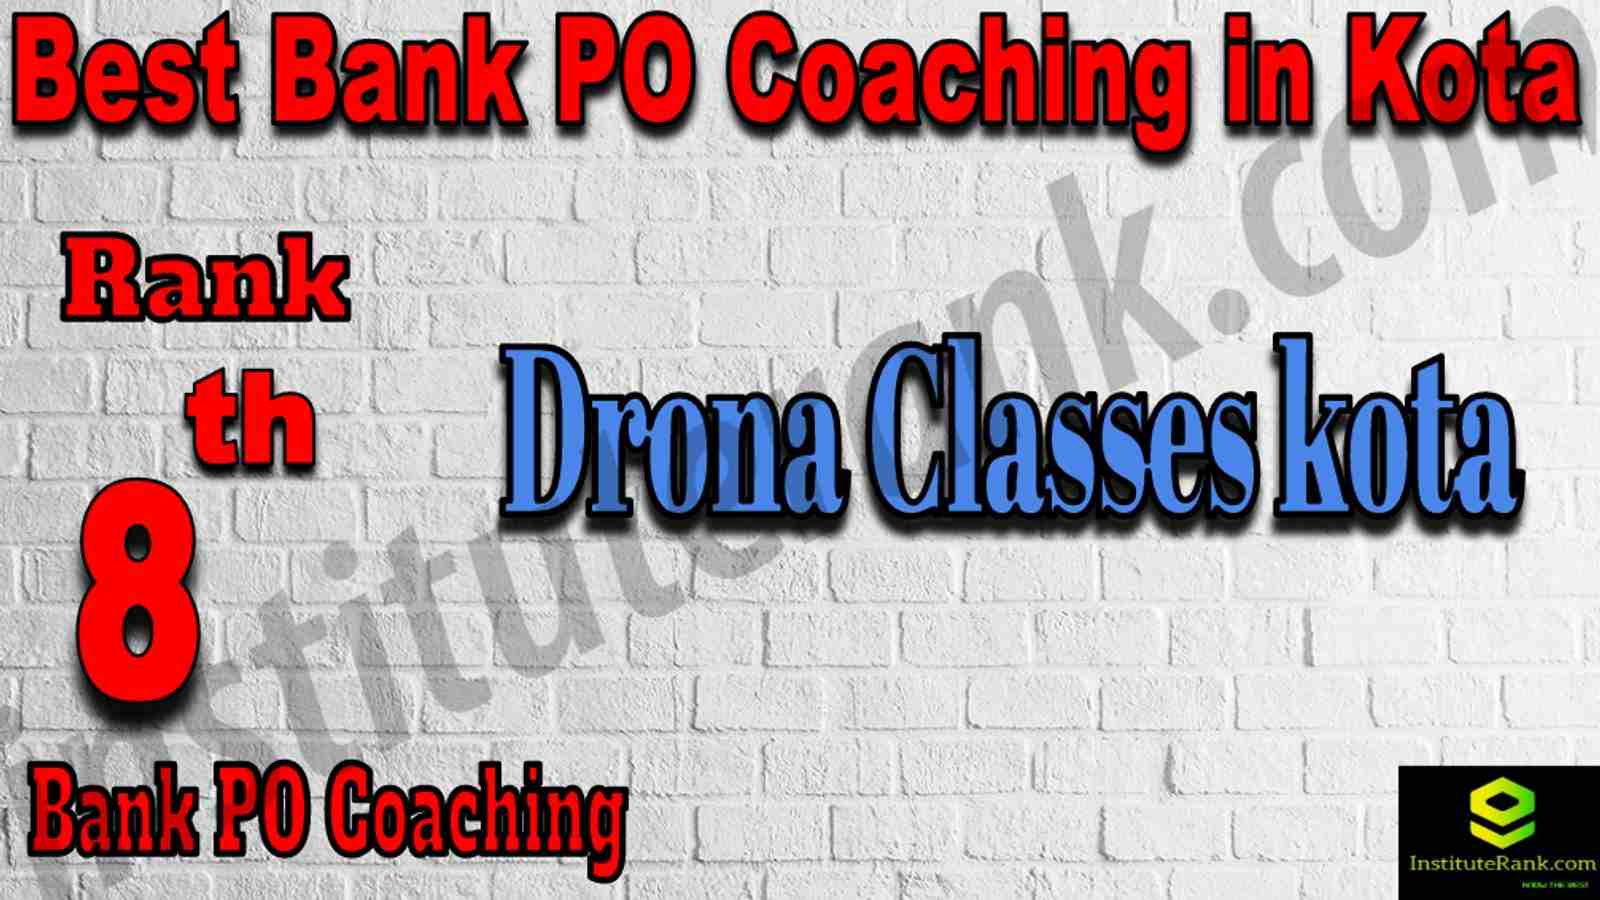 8th Best Bank PO Coaching in Kota